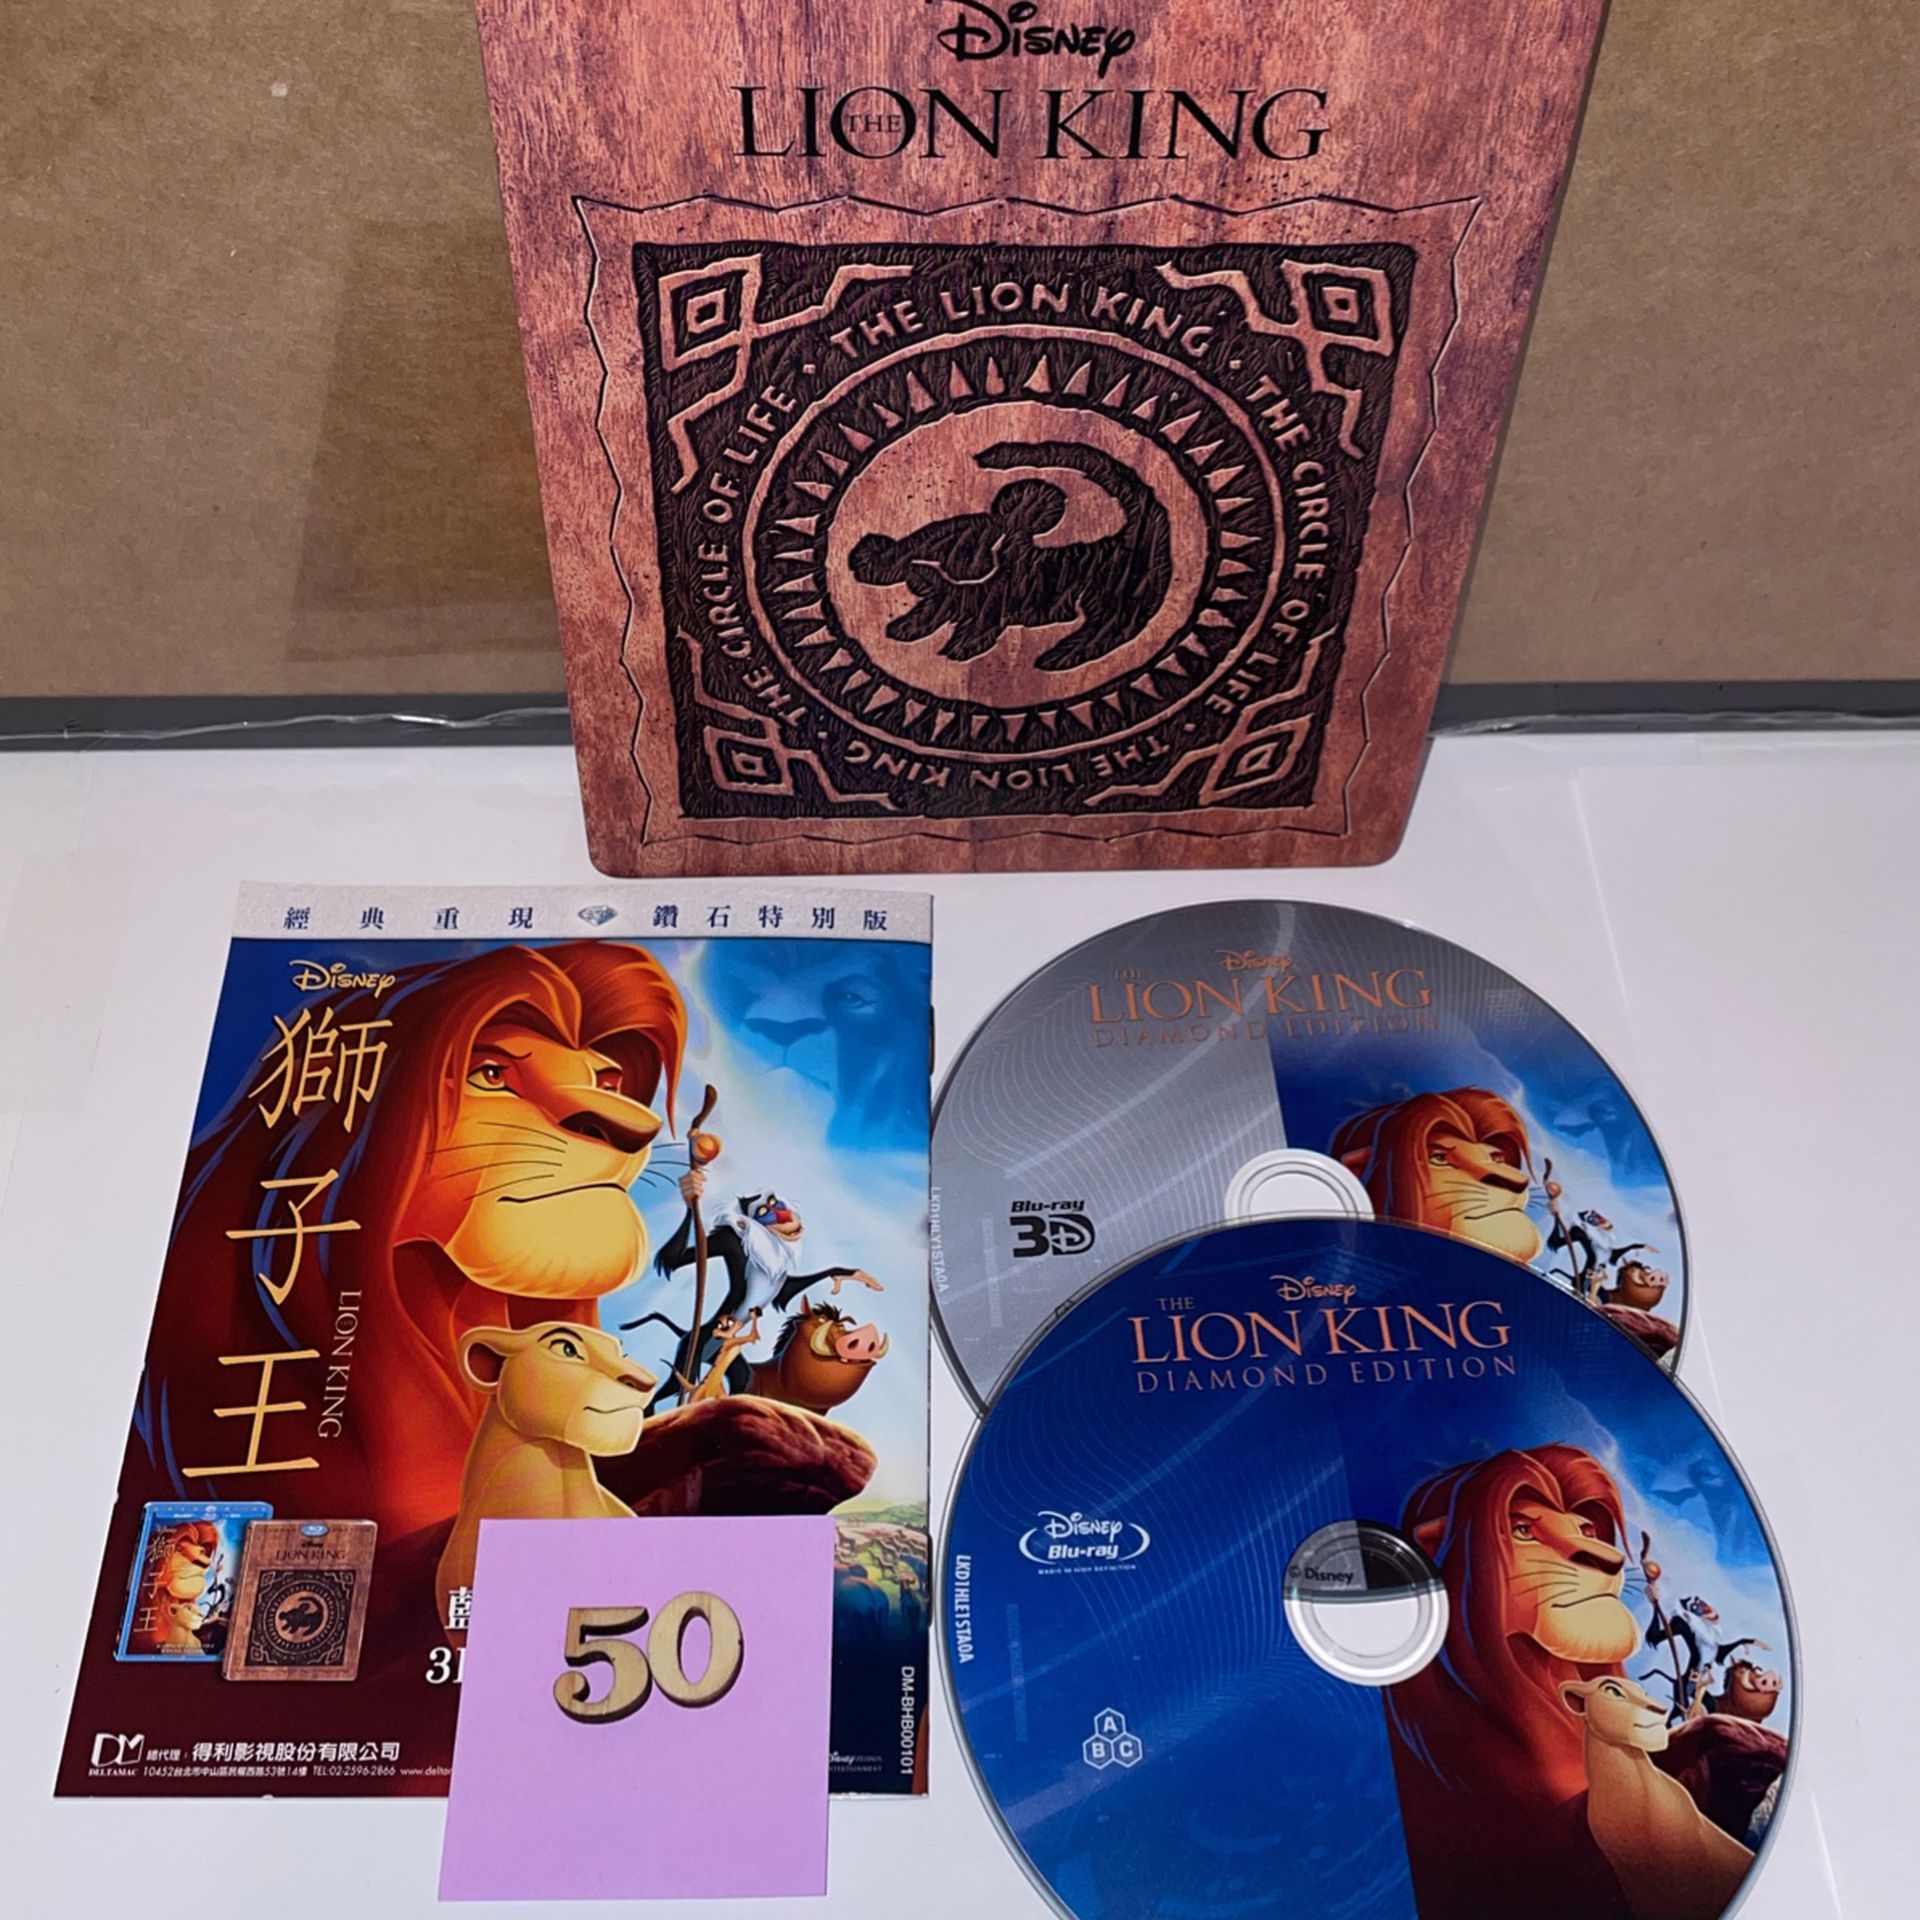 The Lion King - Diamond Edition Steelbook